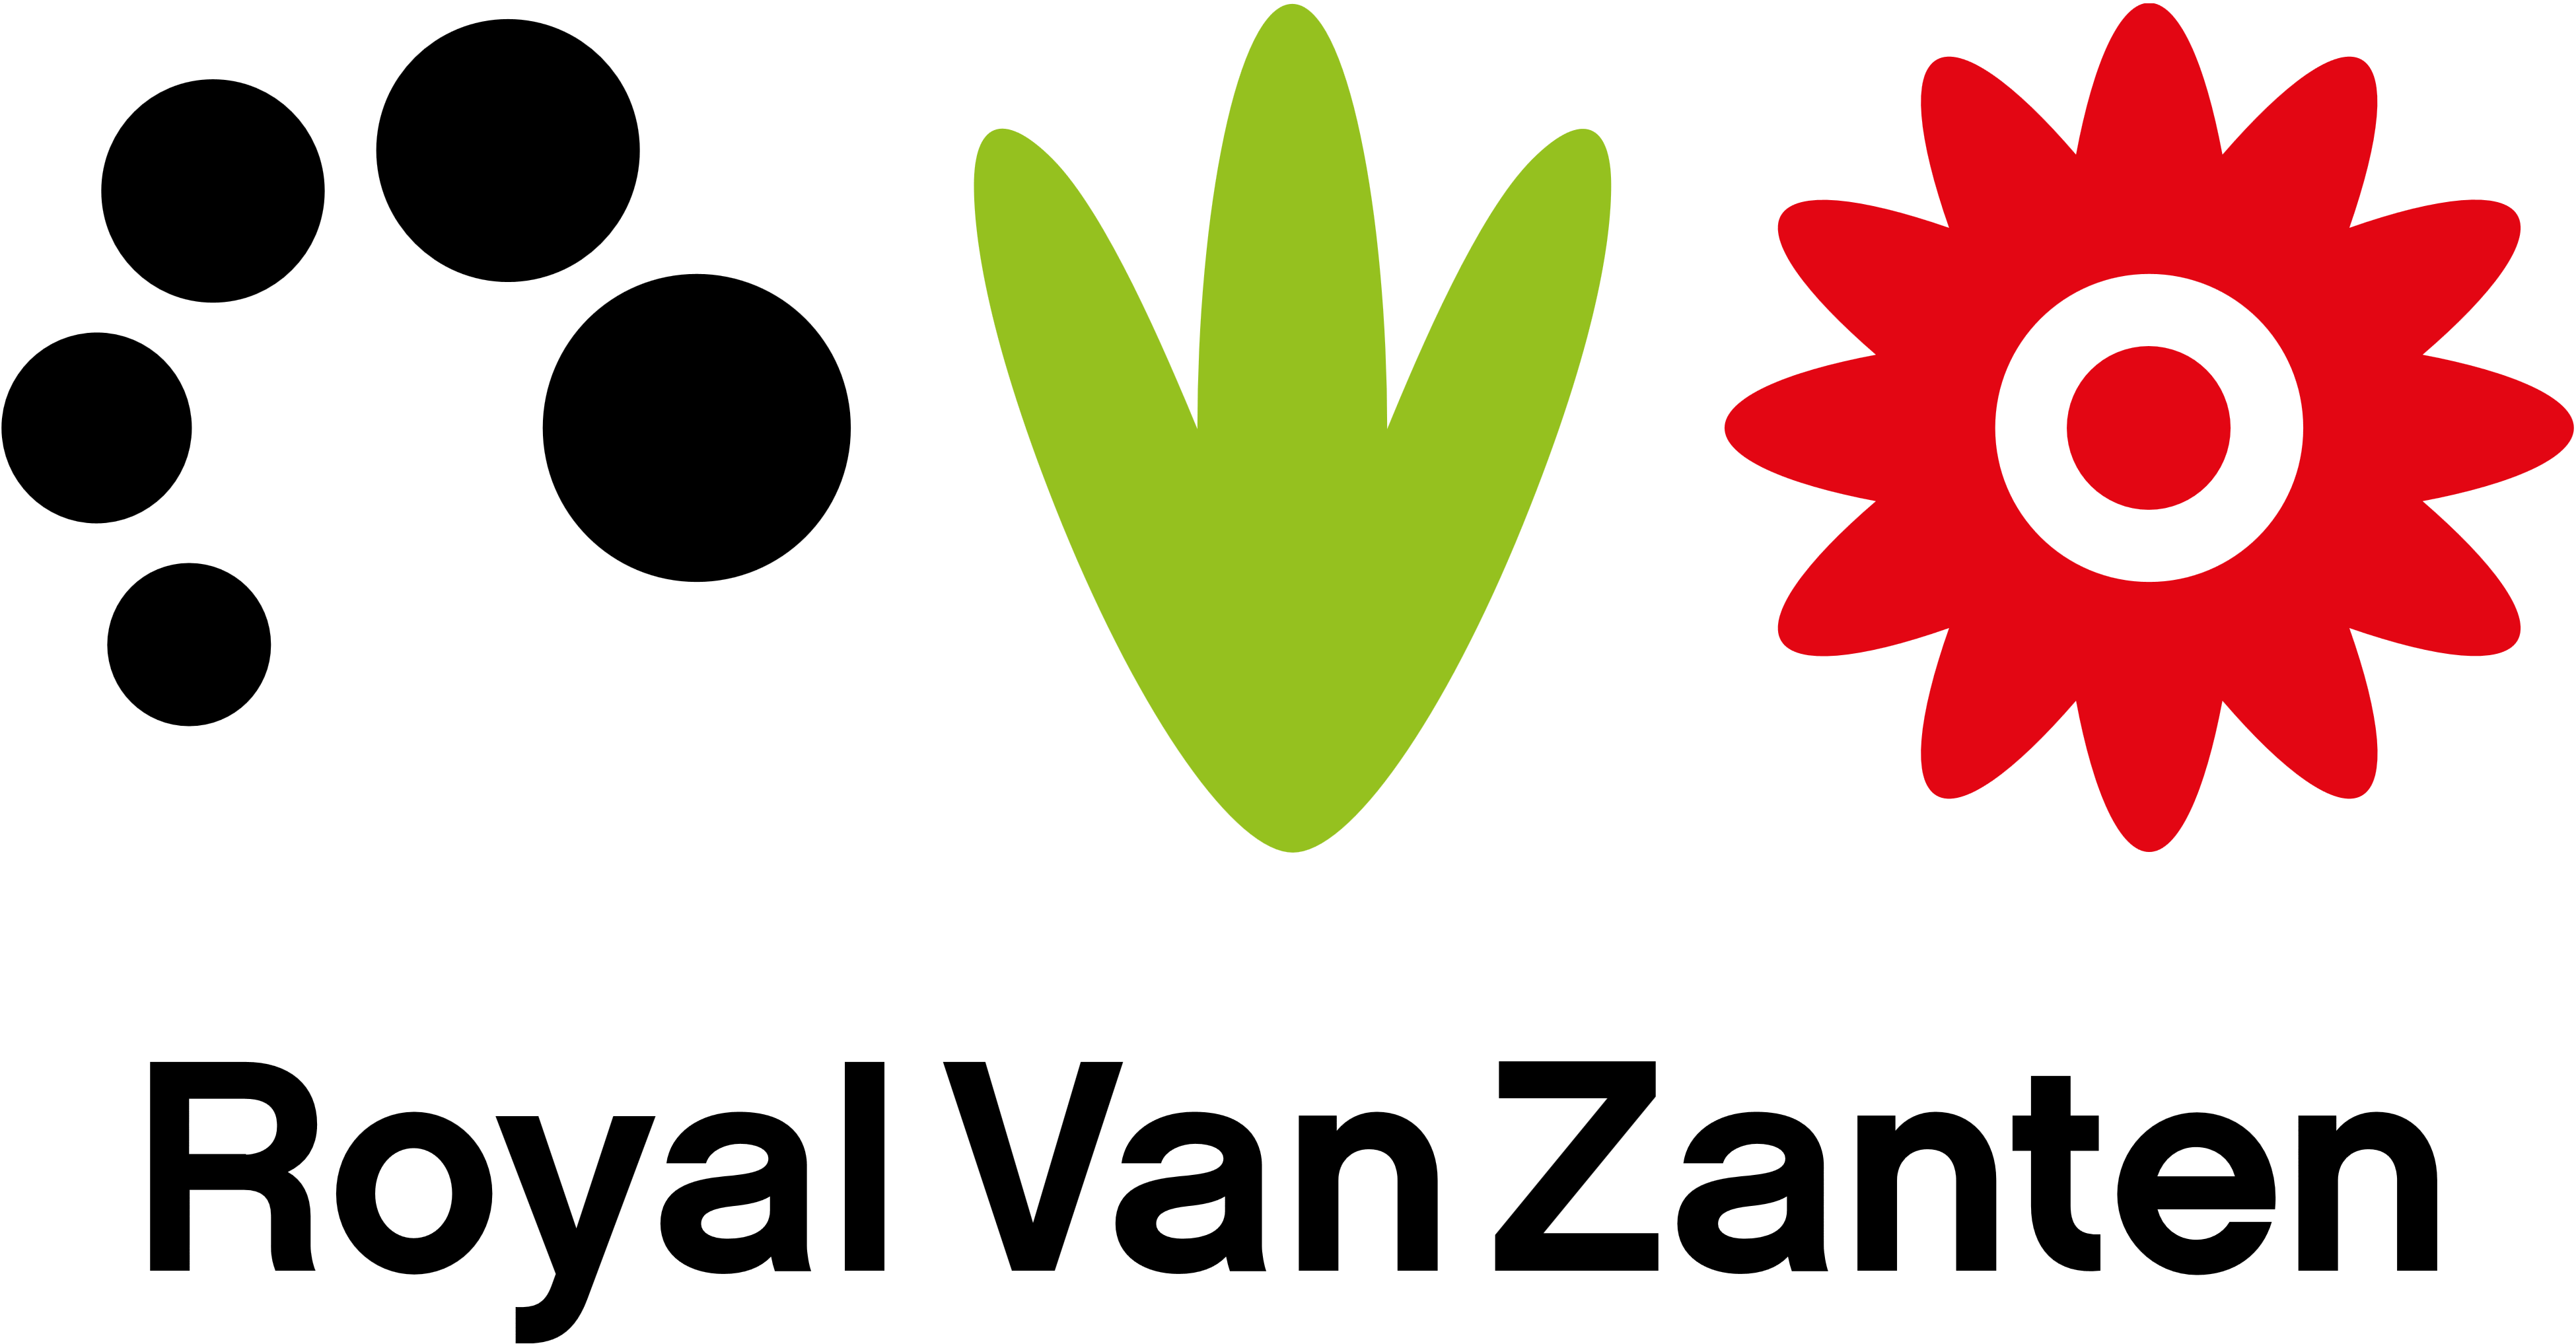 Royal Van Zanten logo, logotype